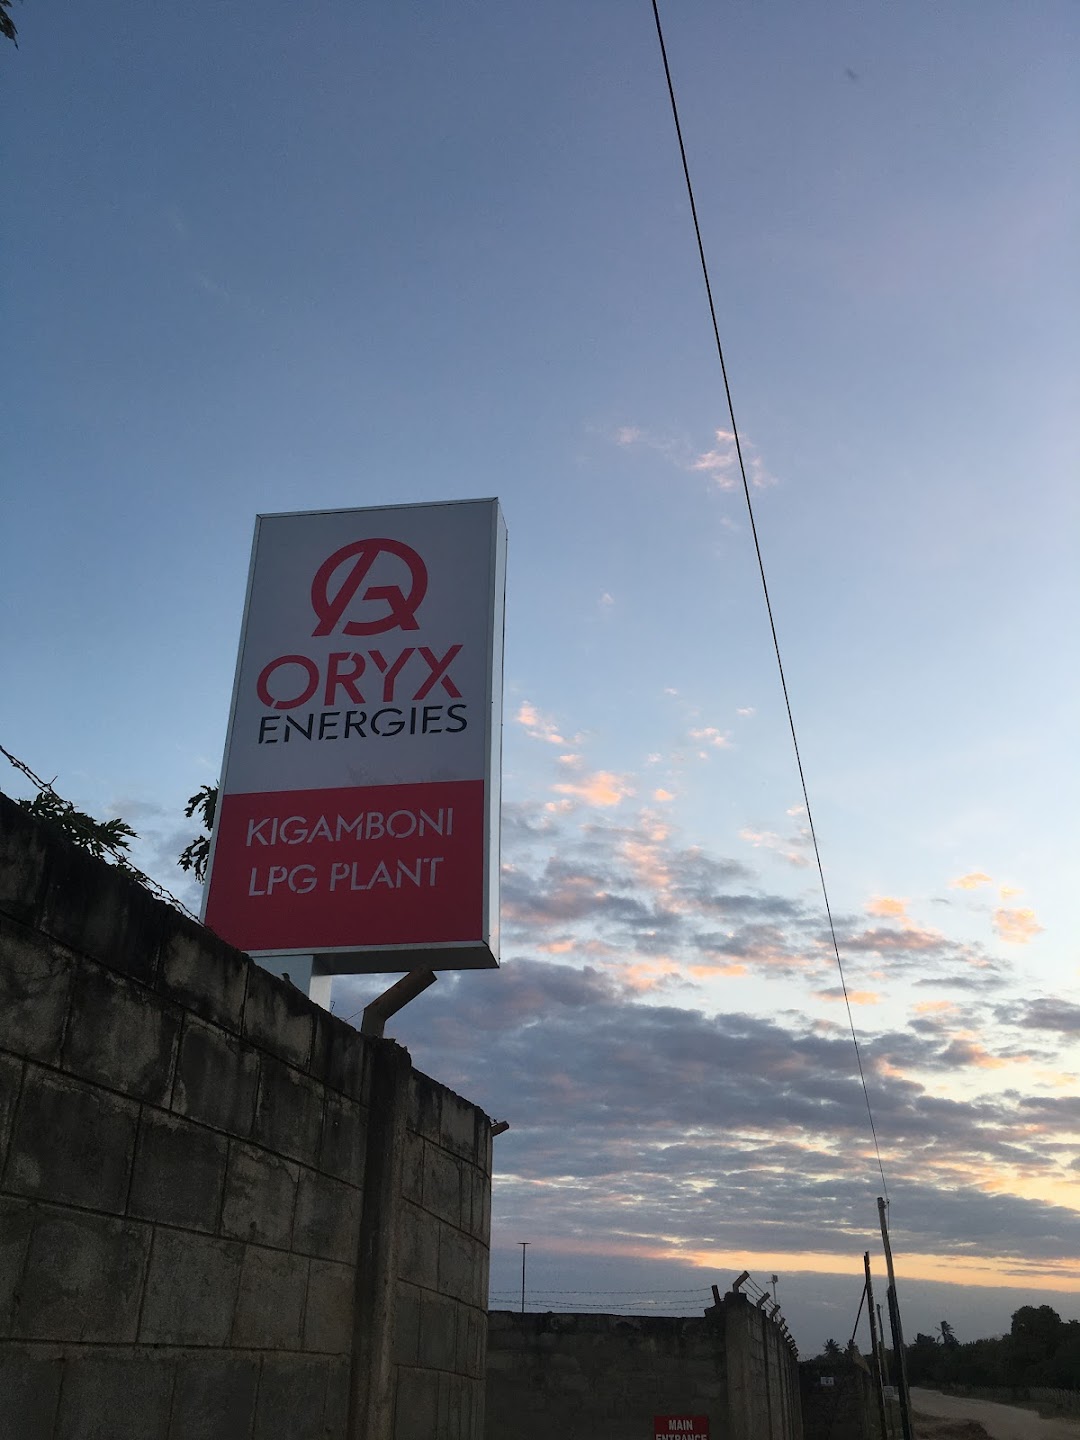 ORYX ENERGIES HQ